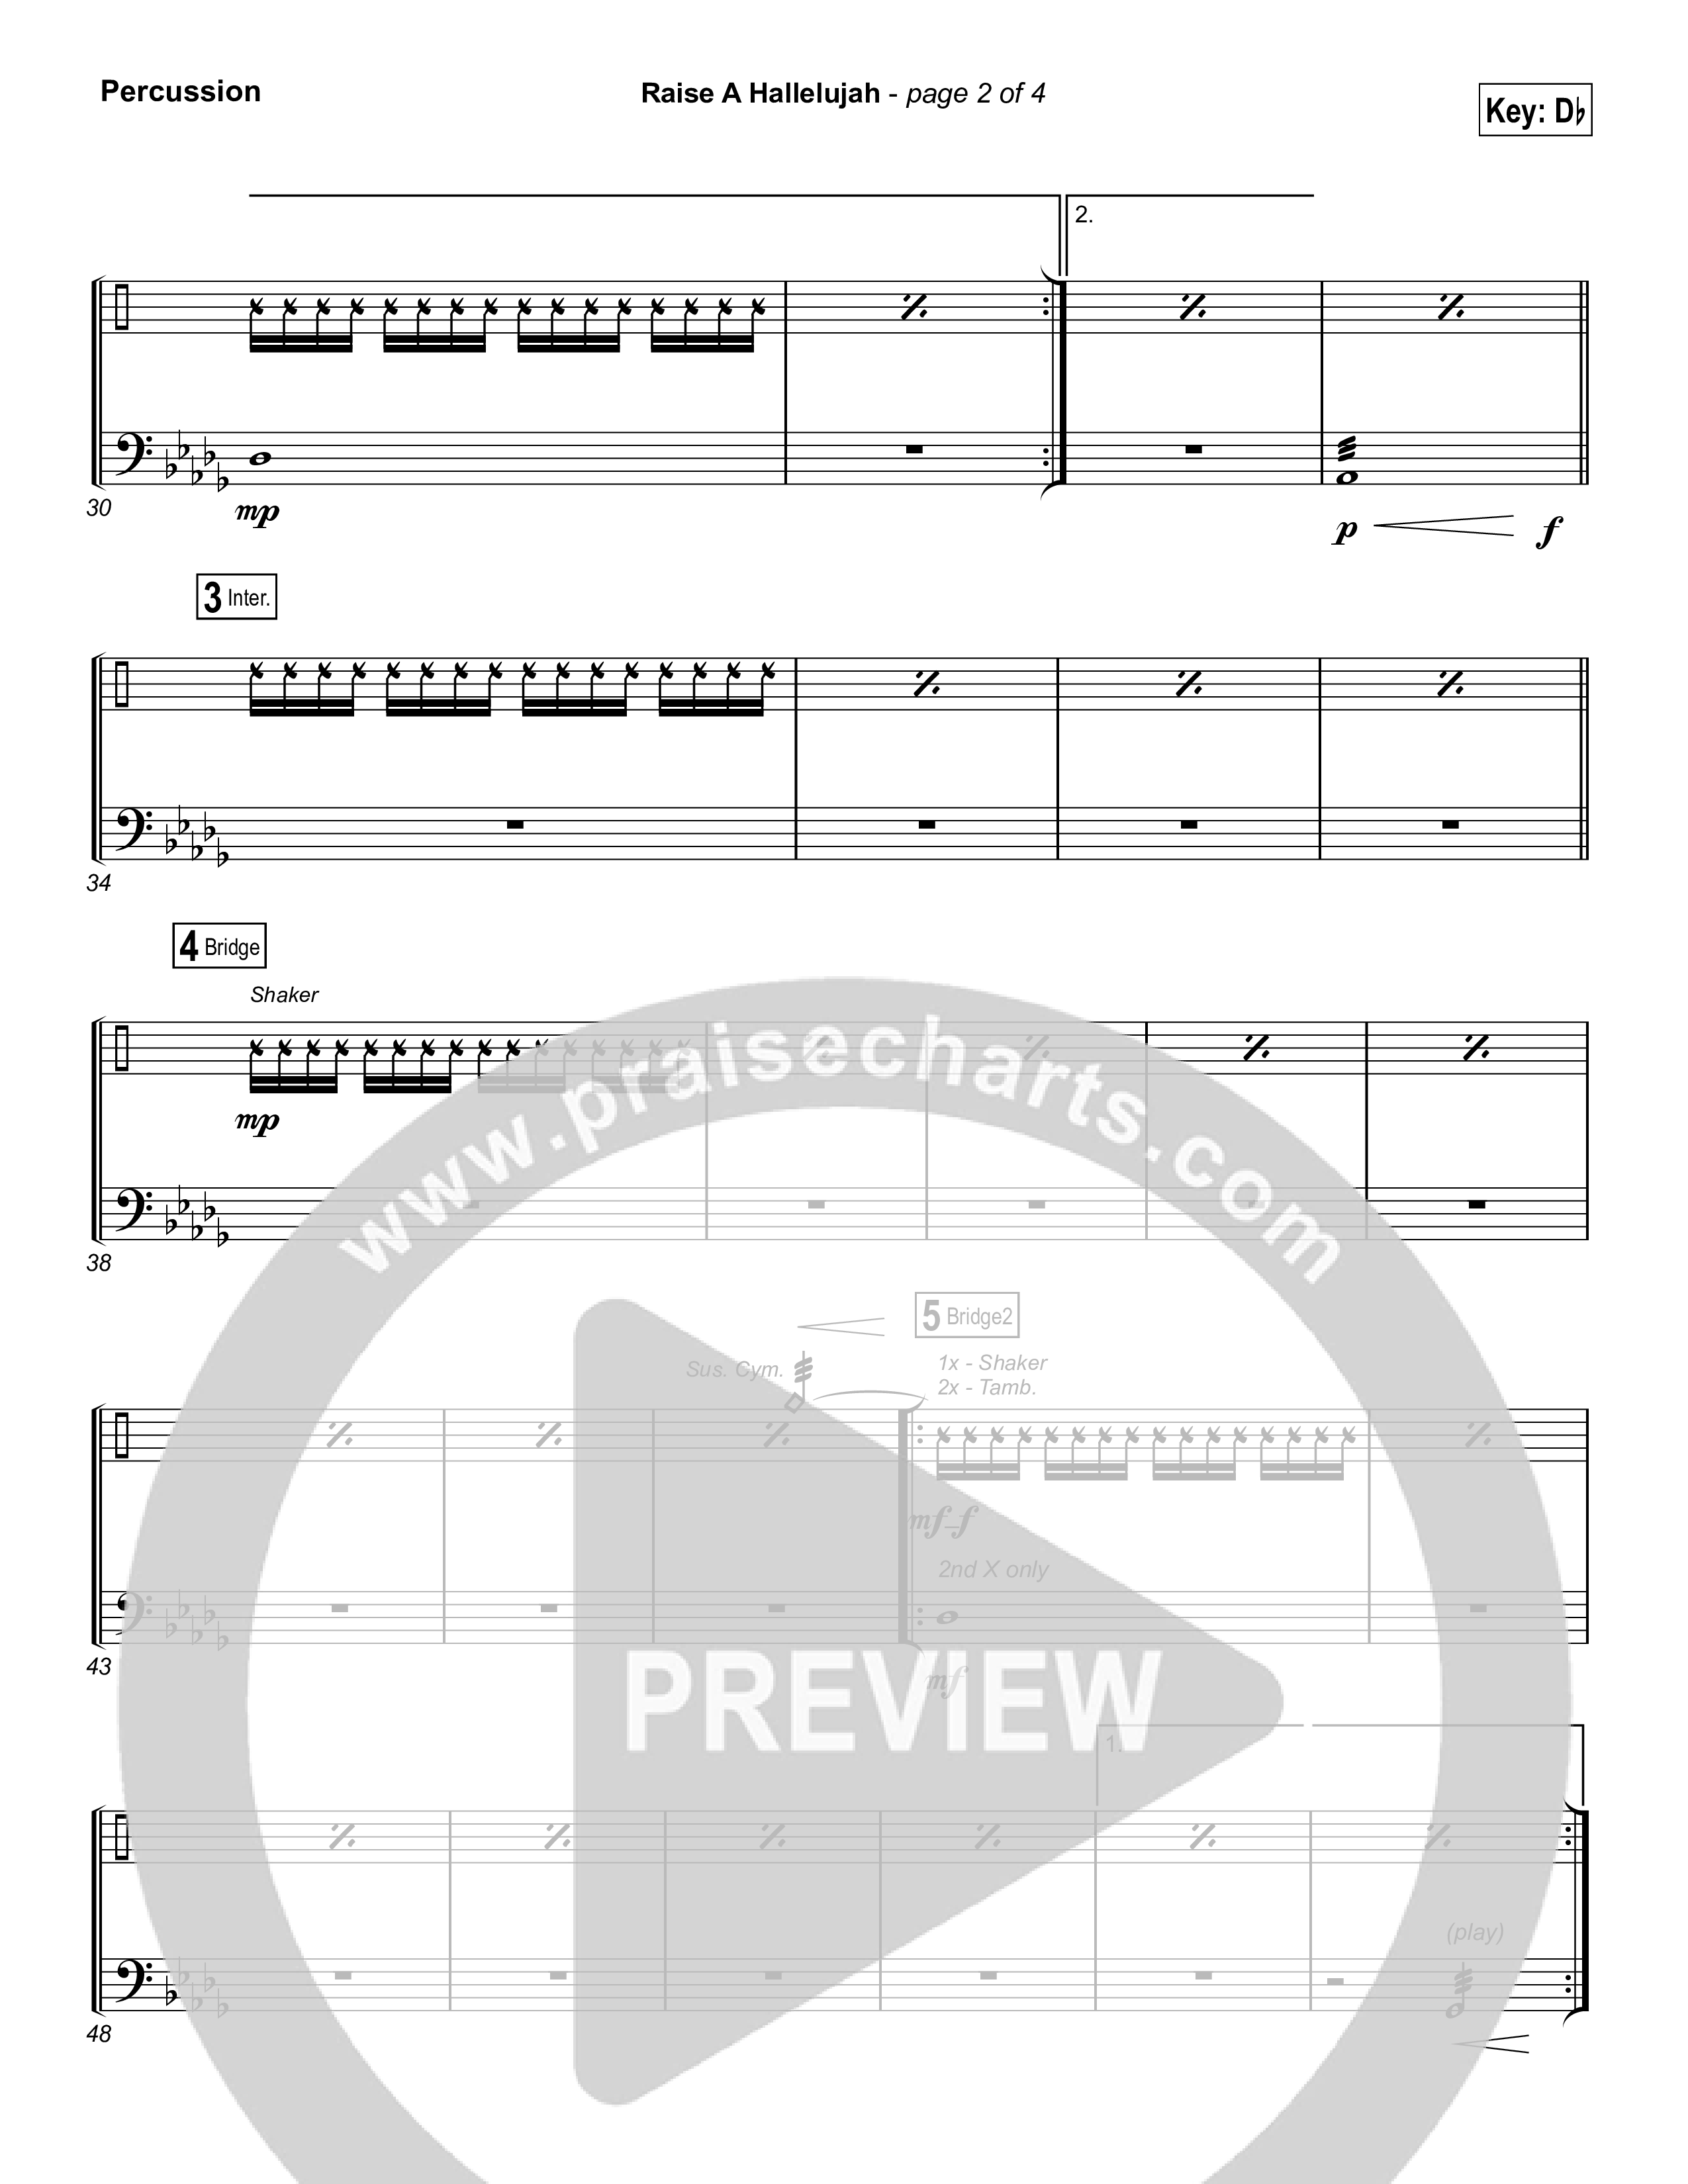 Raise A Hallelujah (Choral Anthem SATB) Percussion (Bethel Music / Arr. Luke Gambill)